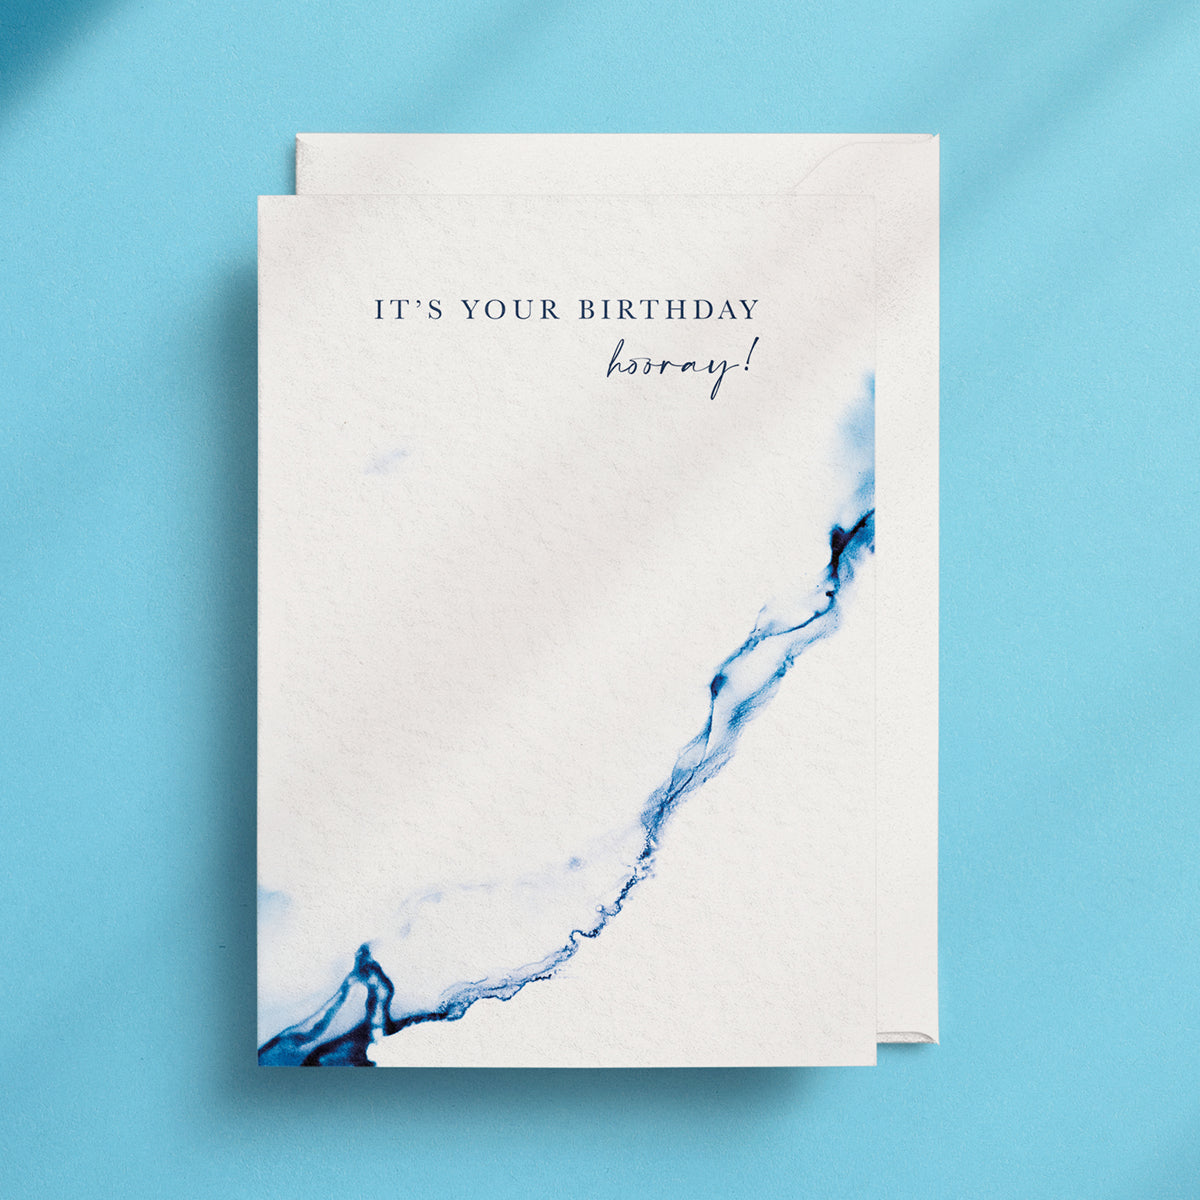 It's Your Birthday Hooray! - Greeting Card